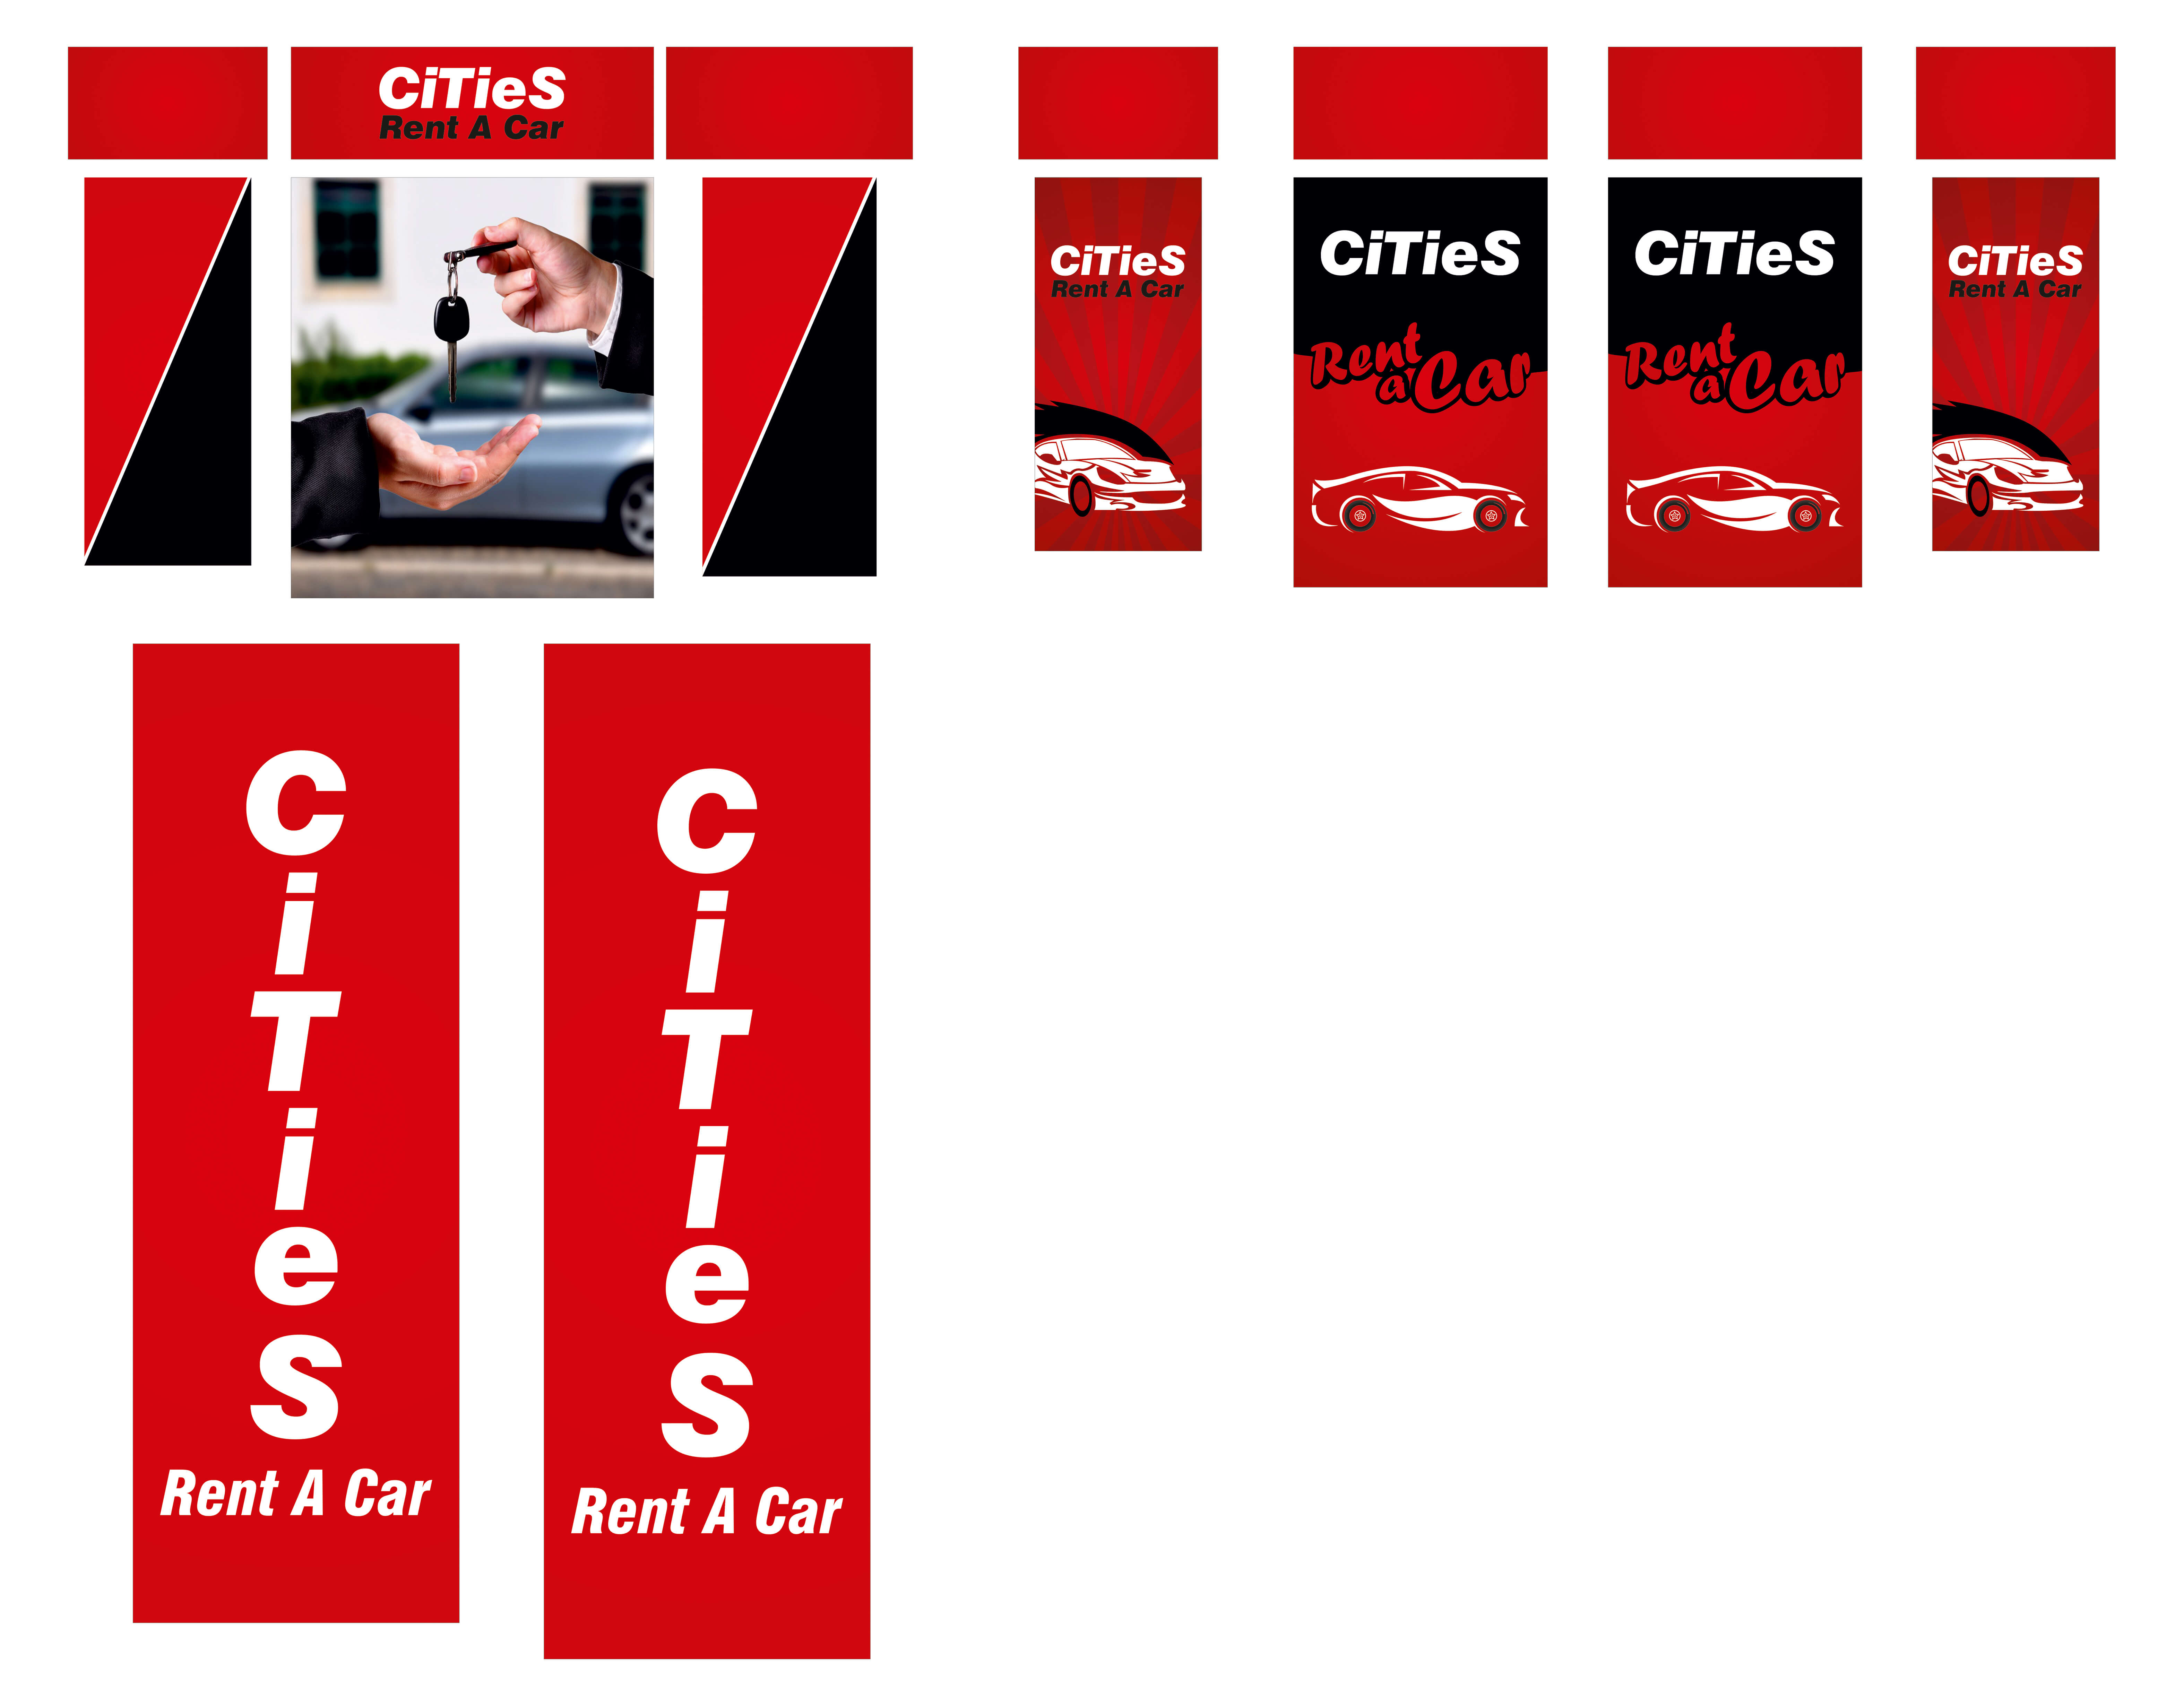 cities car rental